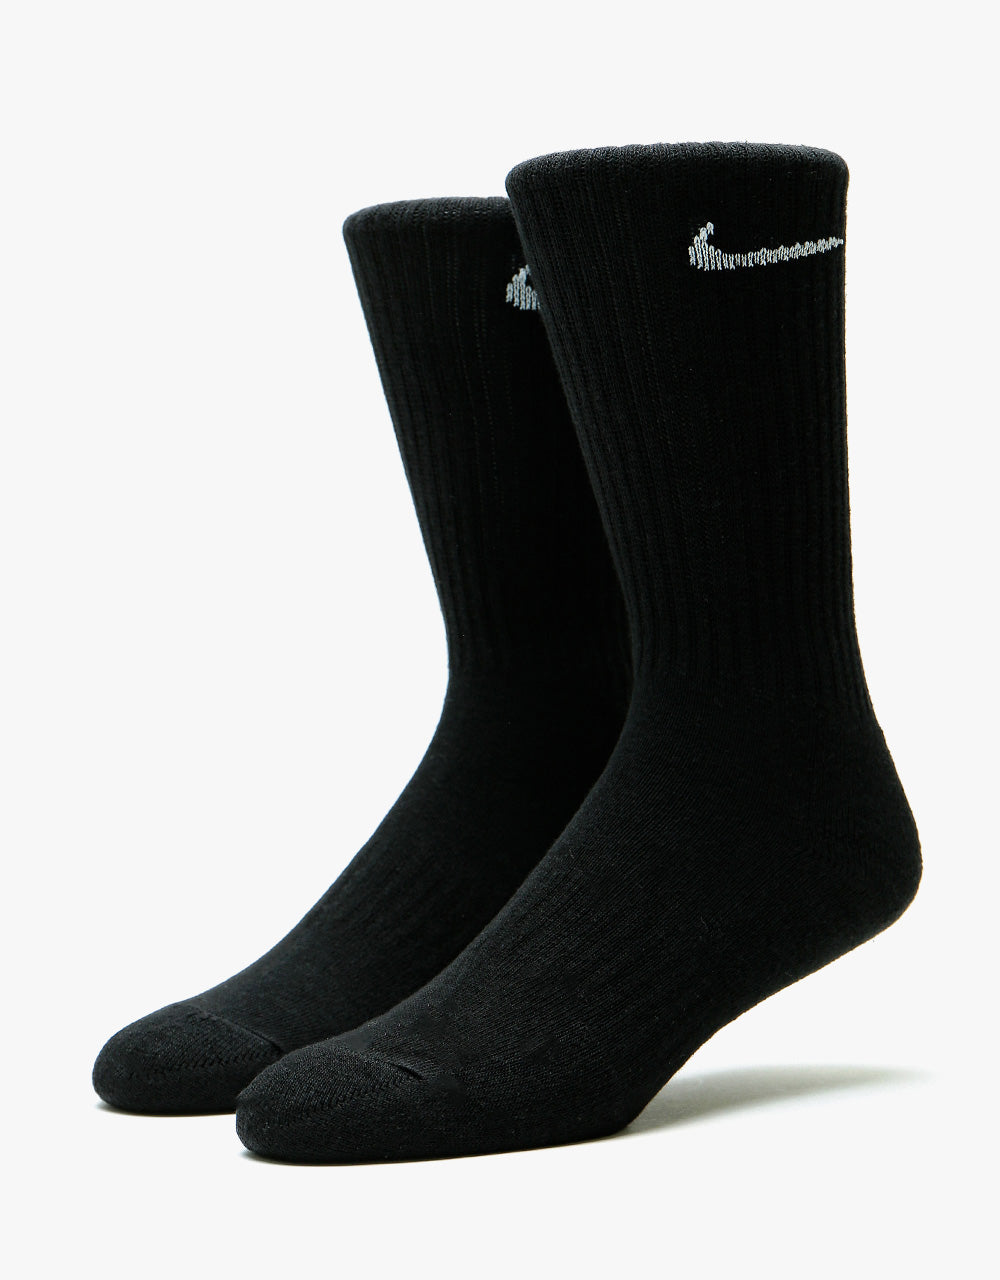 Nike SB Everyday Cushioned Socks 3 Pack - Black/White